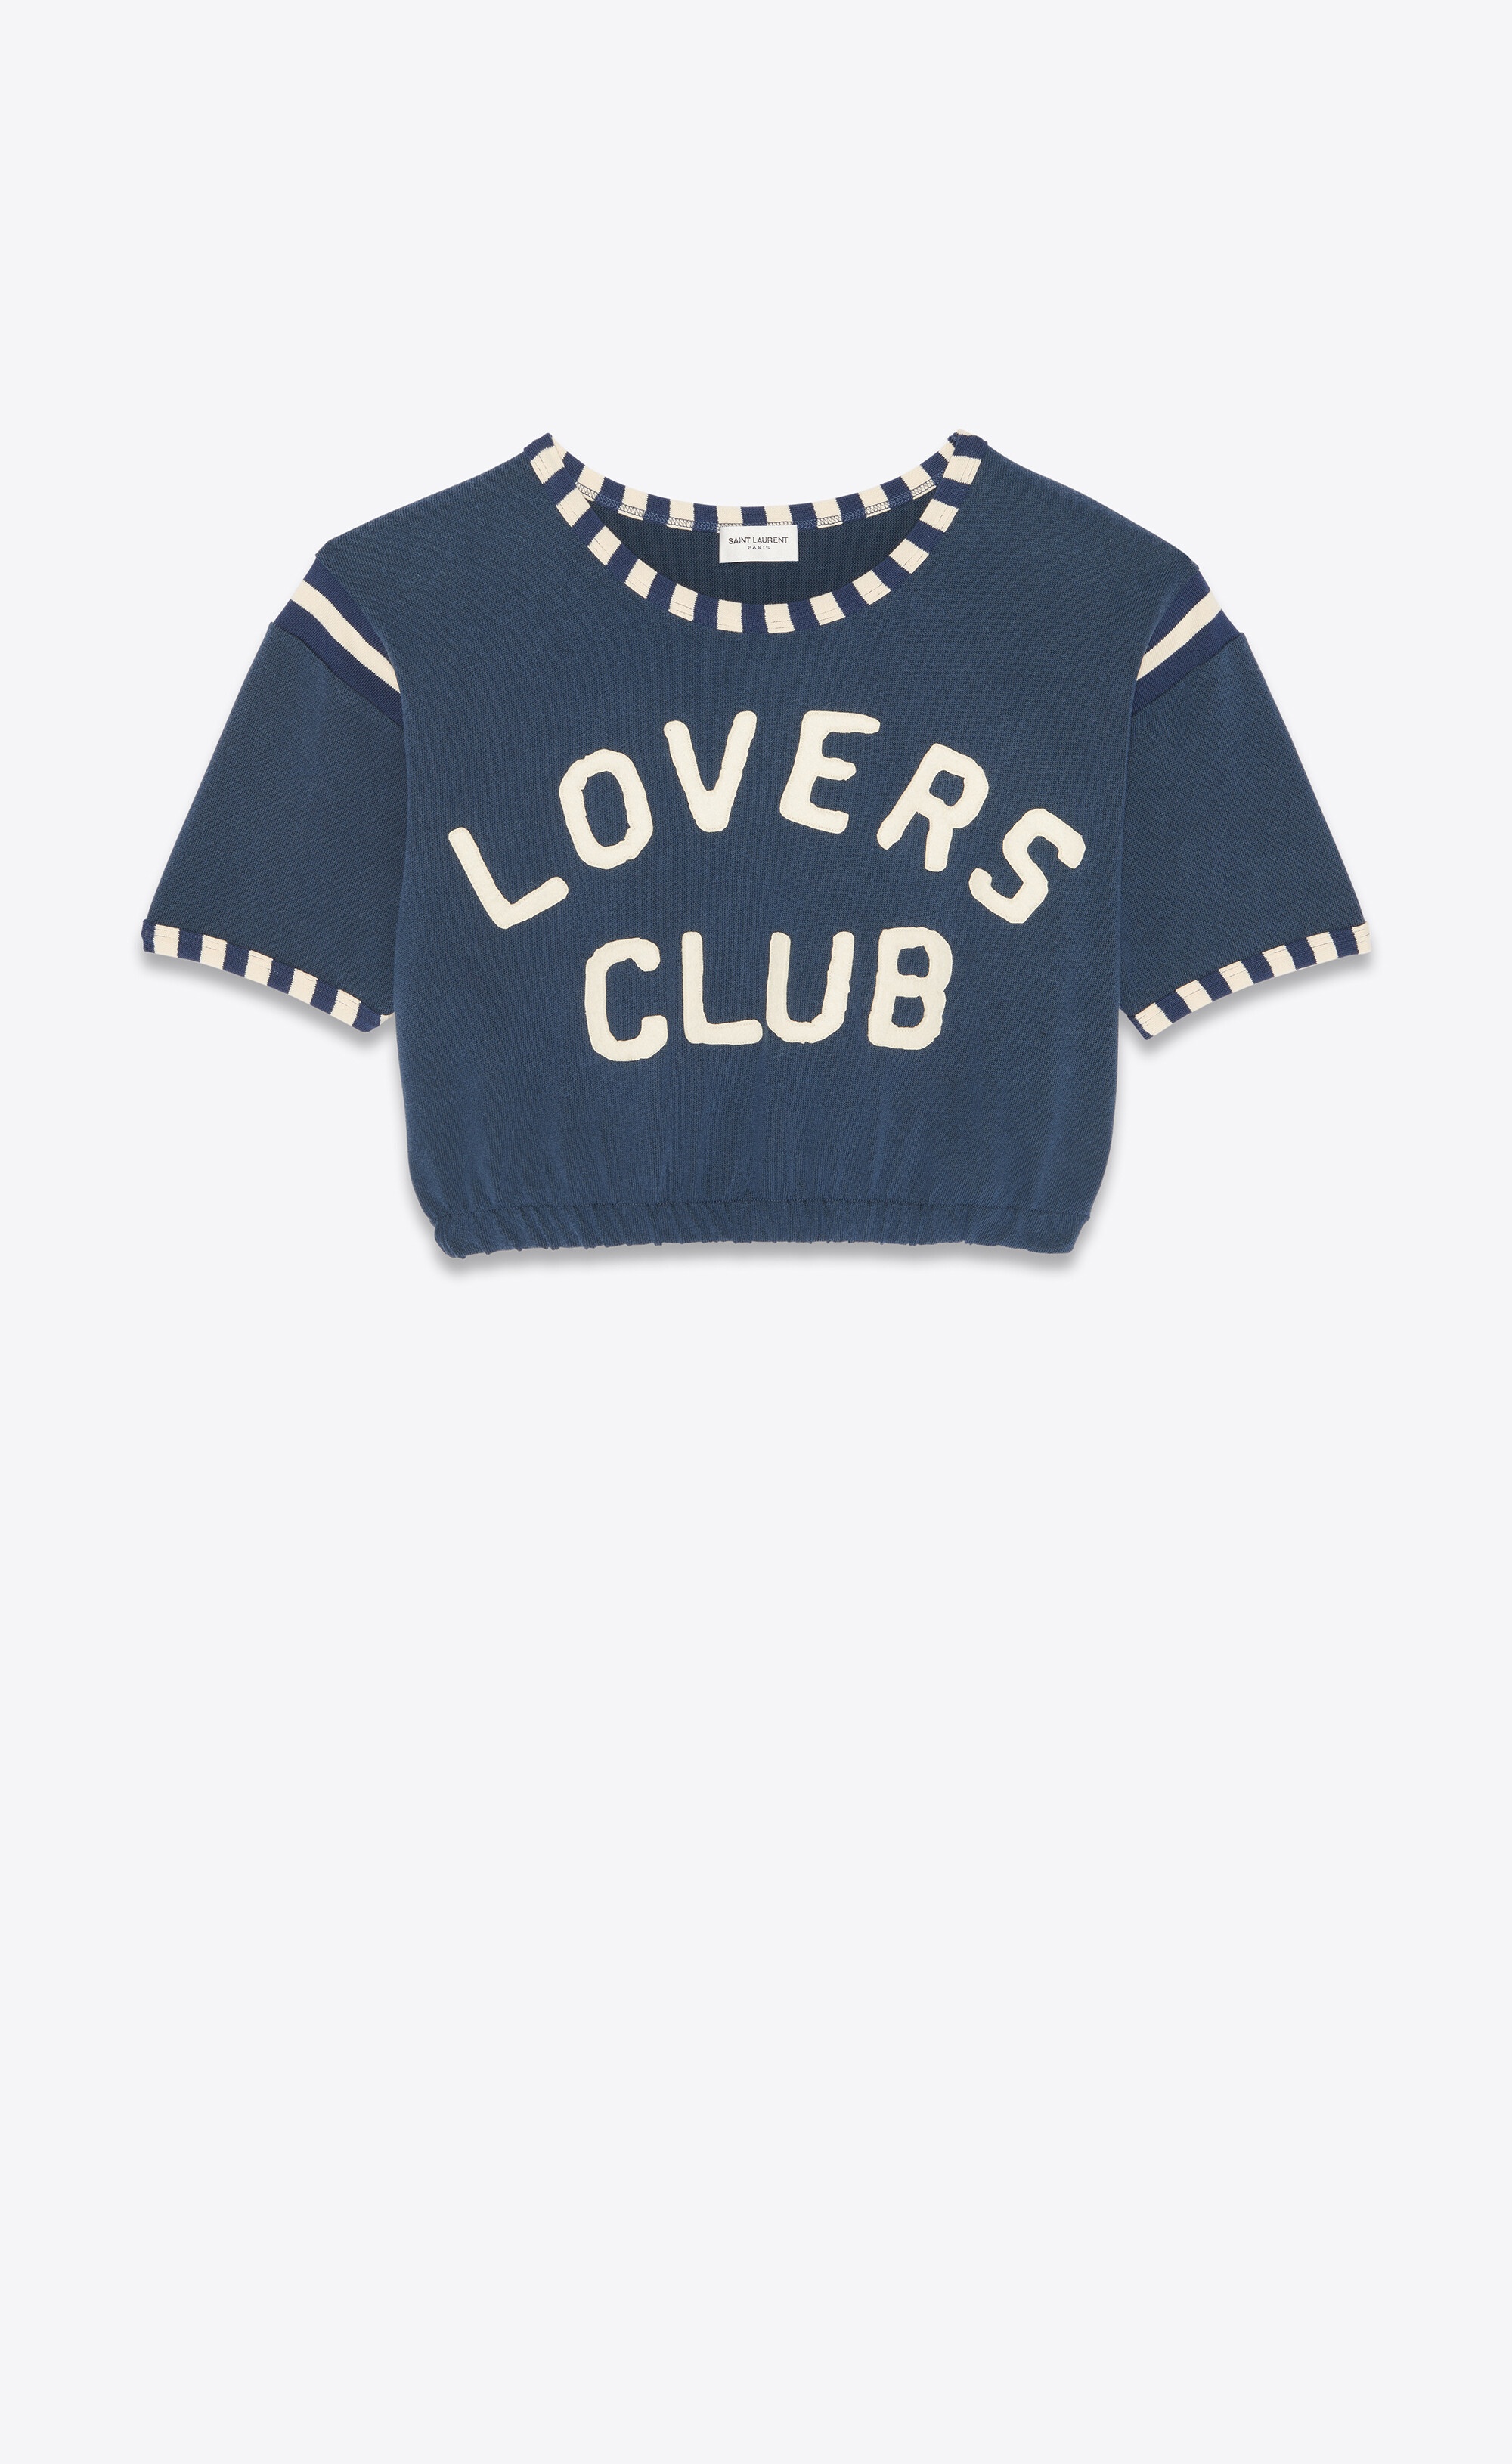 "lovers club" t-shirt - 1